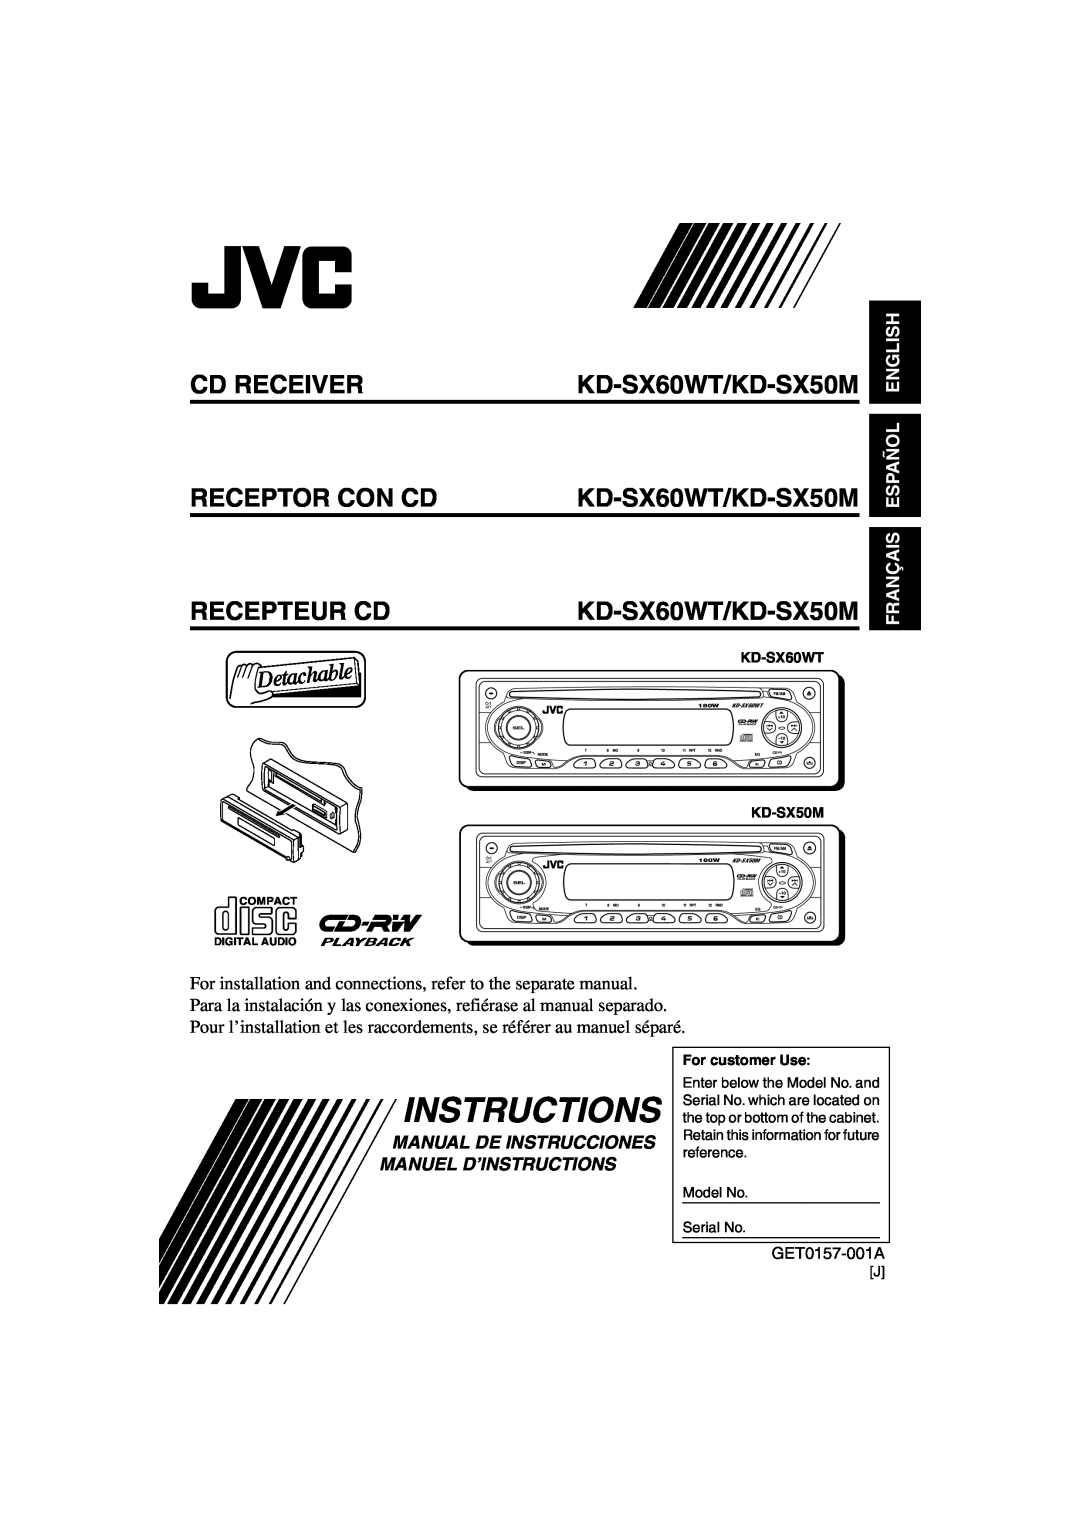 JVC manual Cd Receiver, Receptor Con Cd, Recepteur Cd, KD-SX60WT/KD-SX50M, Français Español English, Instructions 